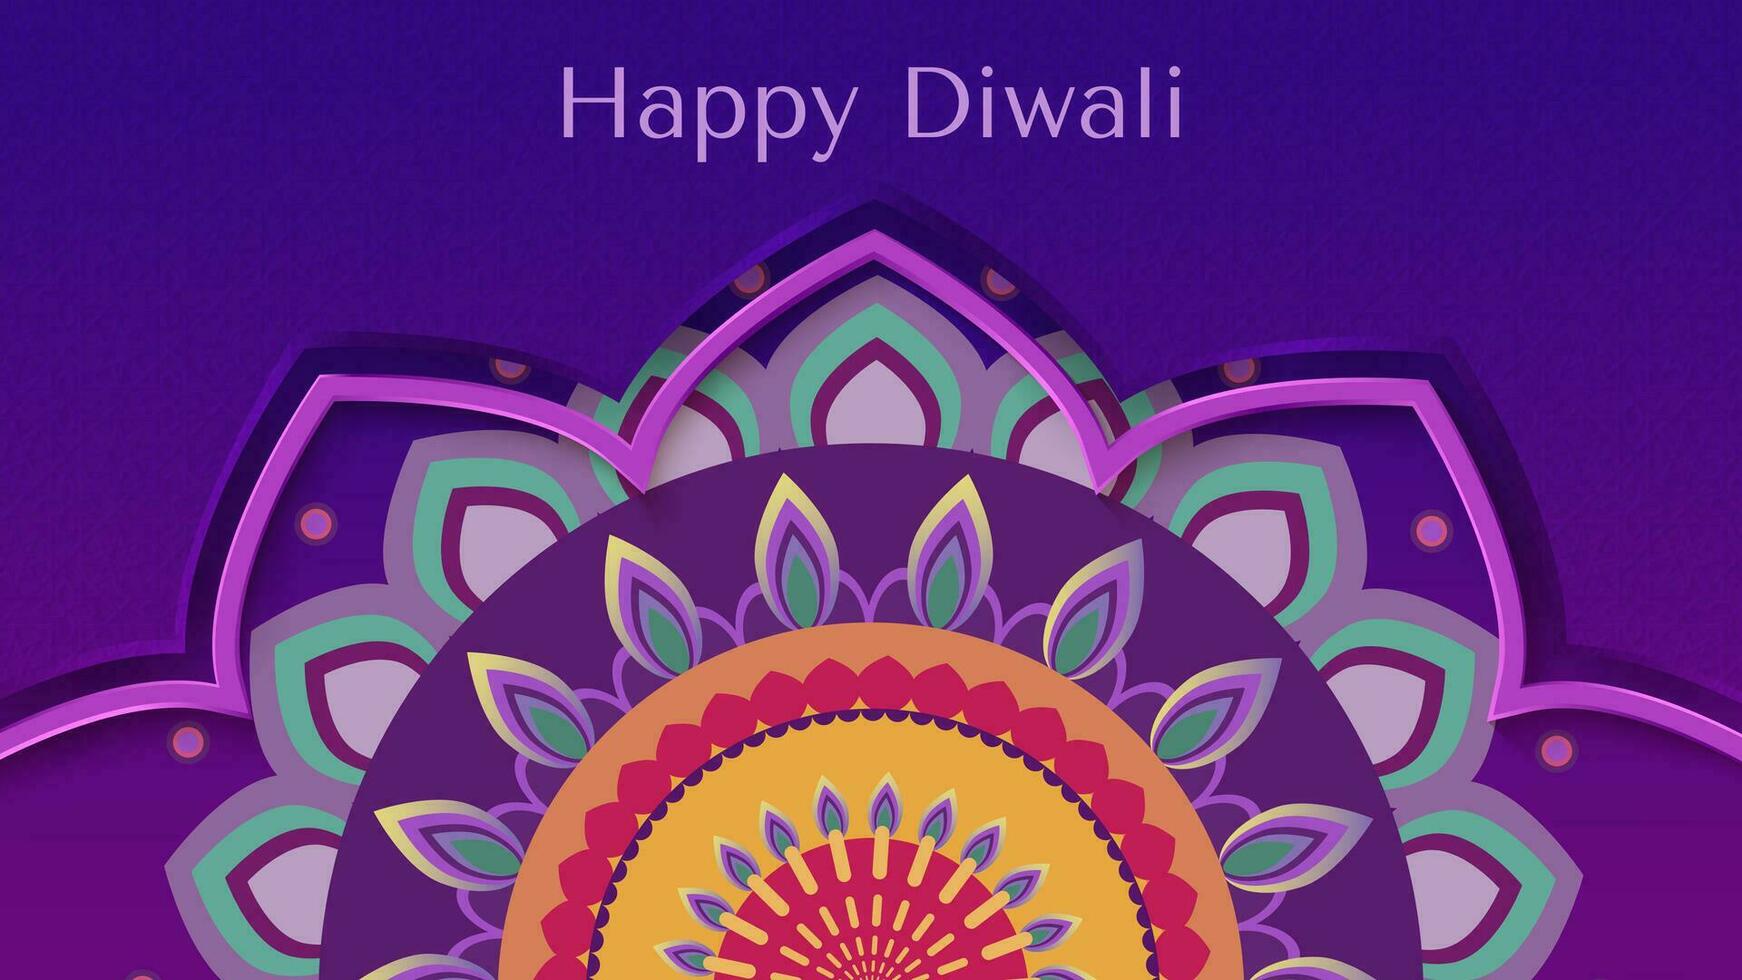 Diwali festival greeting card with beautiful rangoli and diya background. Vector illustration